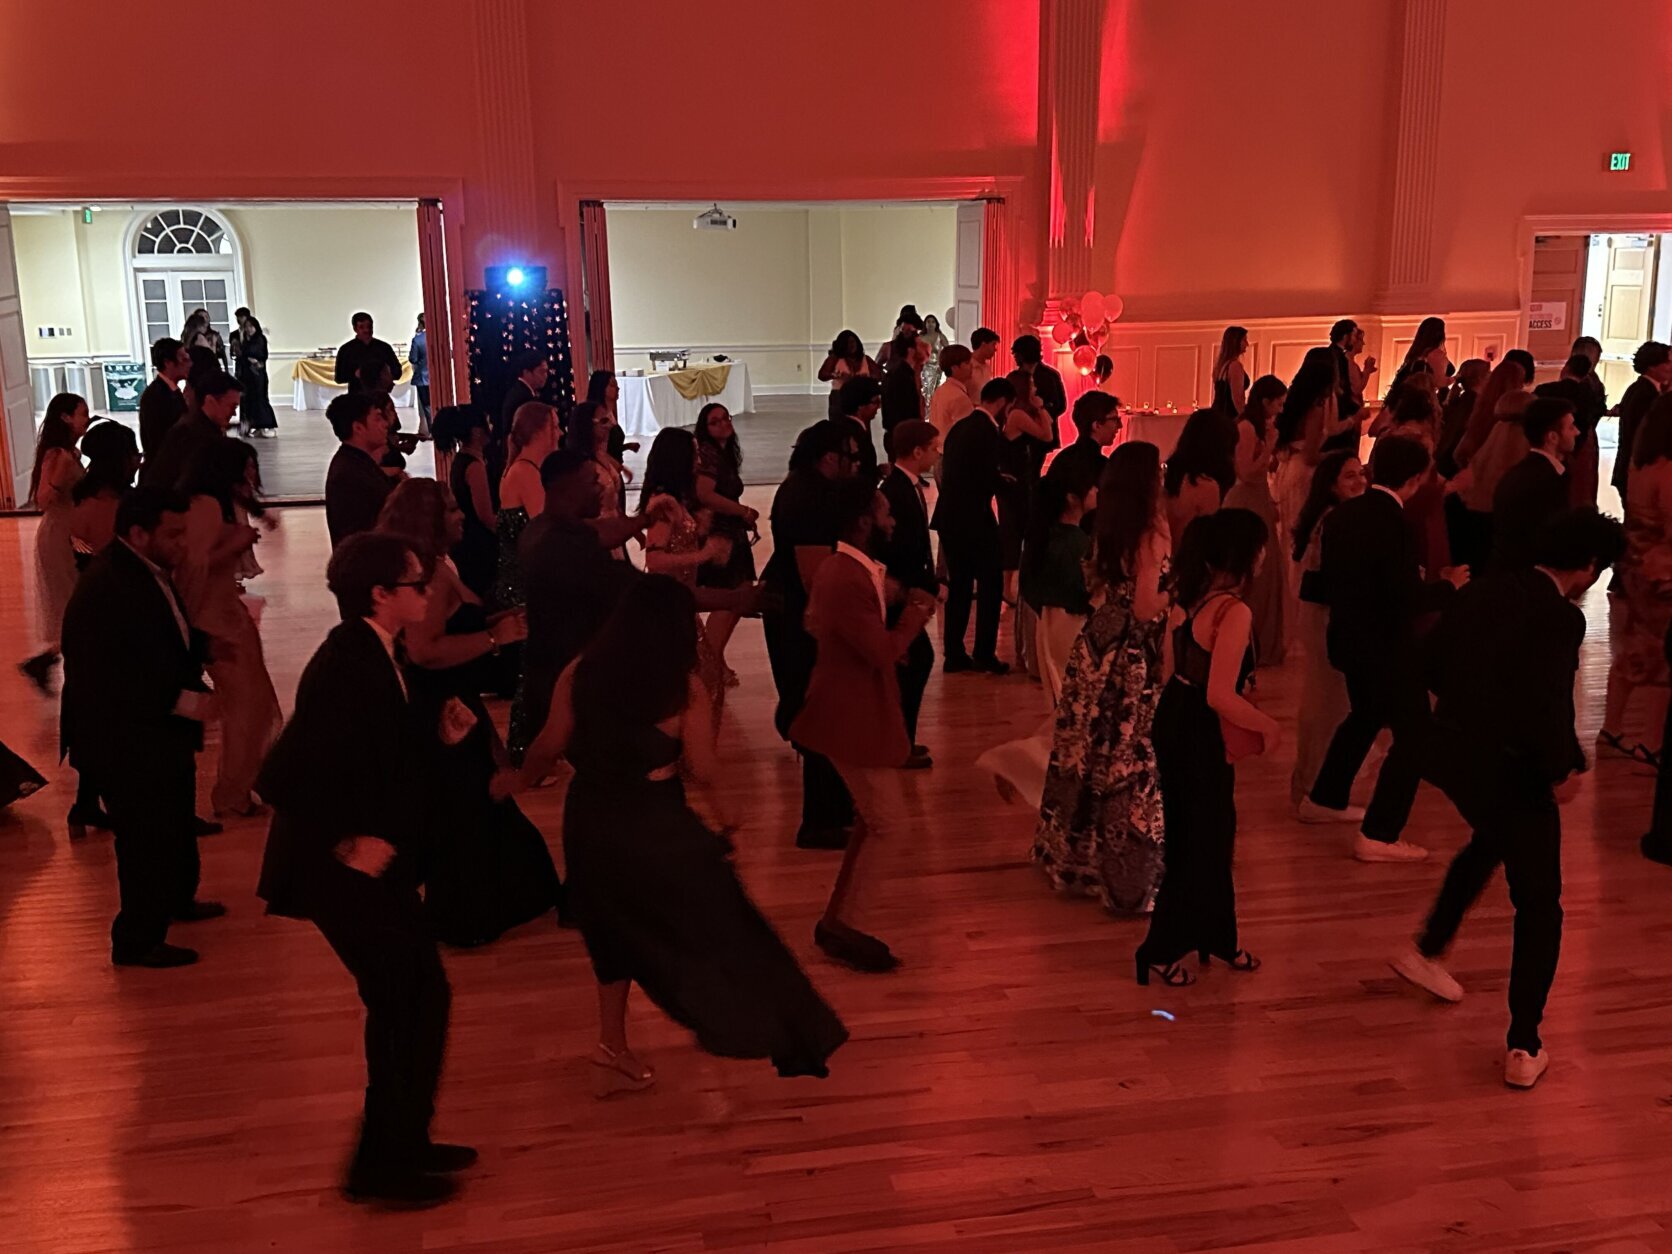 People celebrating on a dance floor